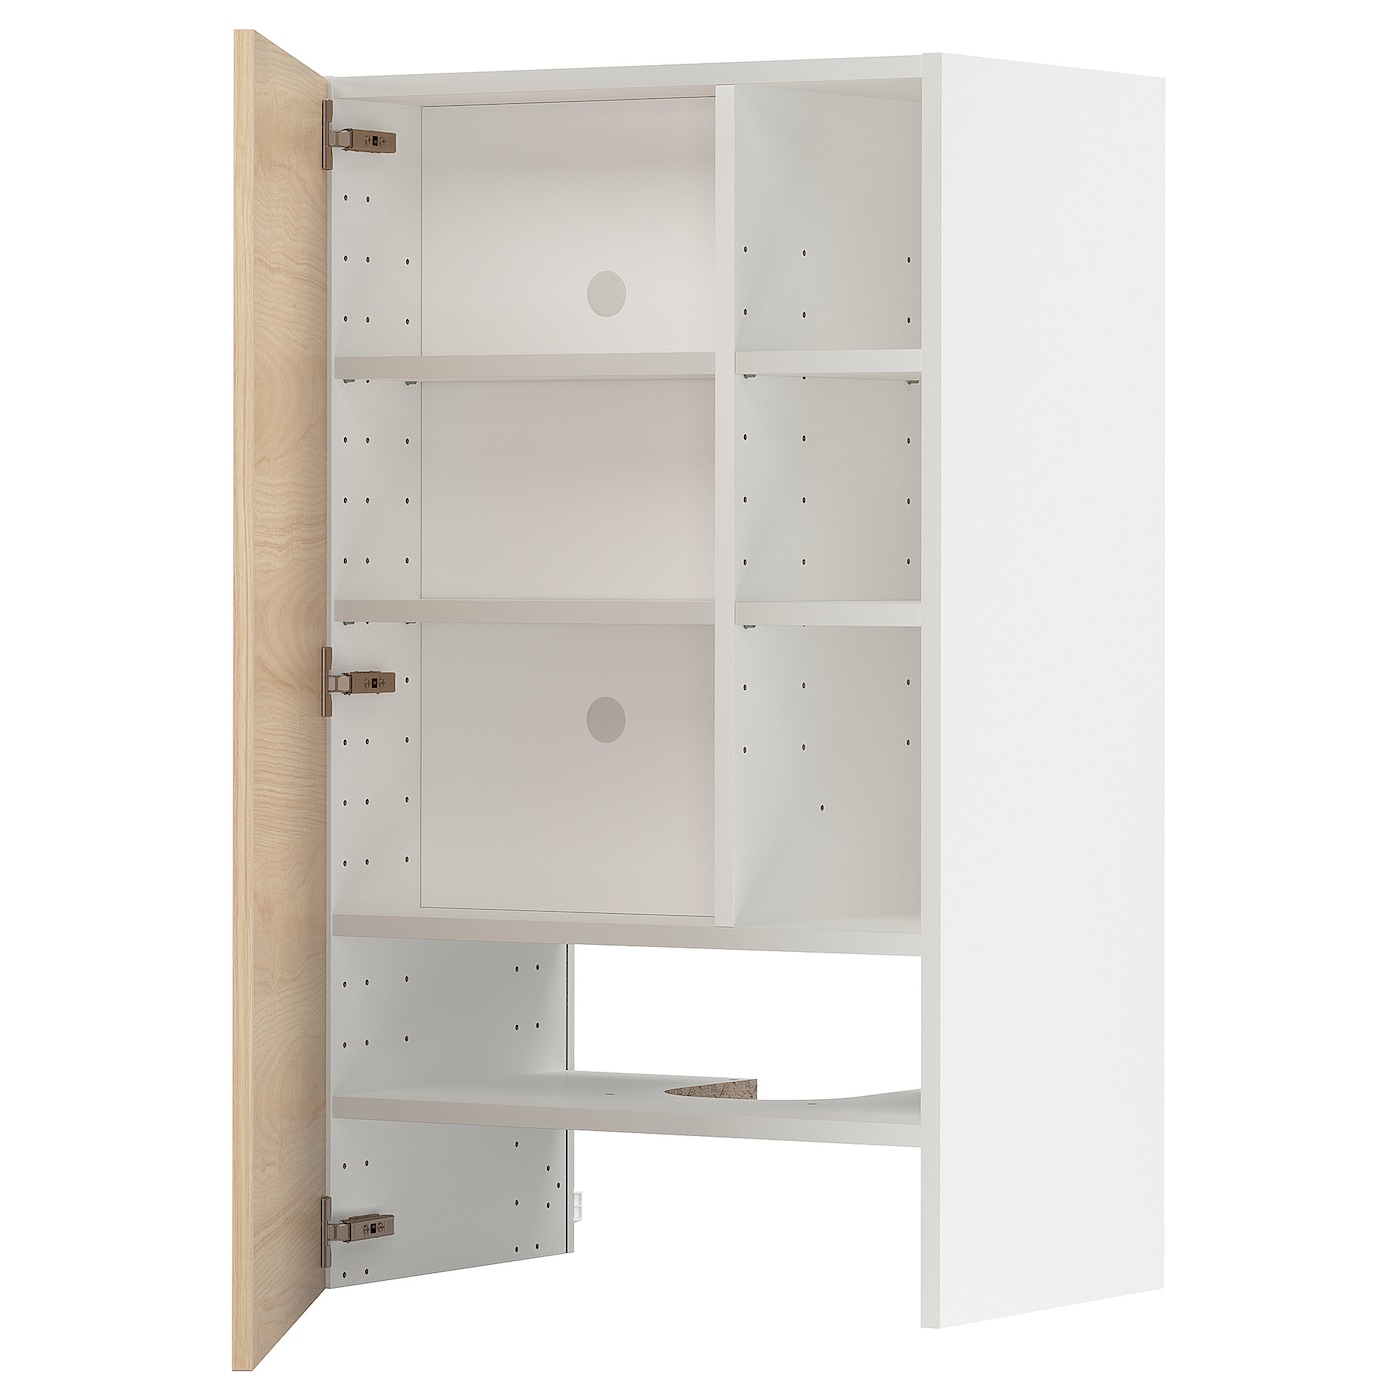 Навесной шкаф - METOD IKEA/ МЕТОД ИКЕА, 100х60 см, белый/под беленый дуб